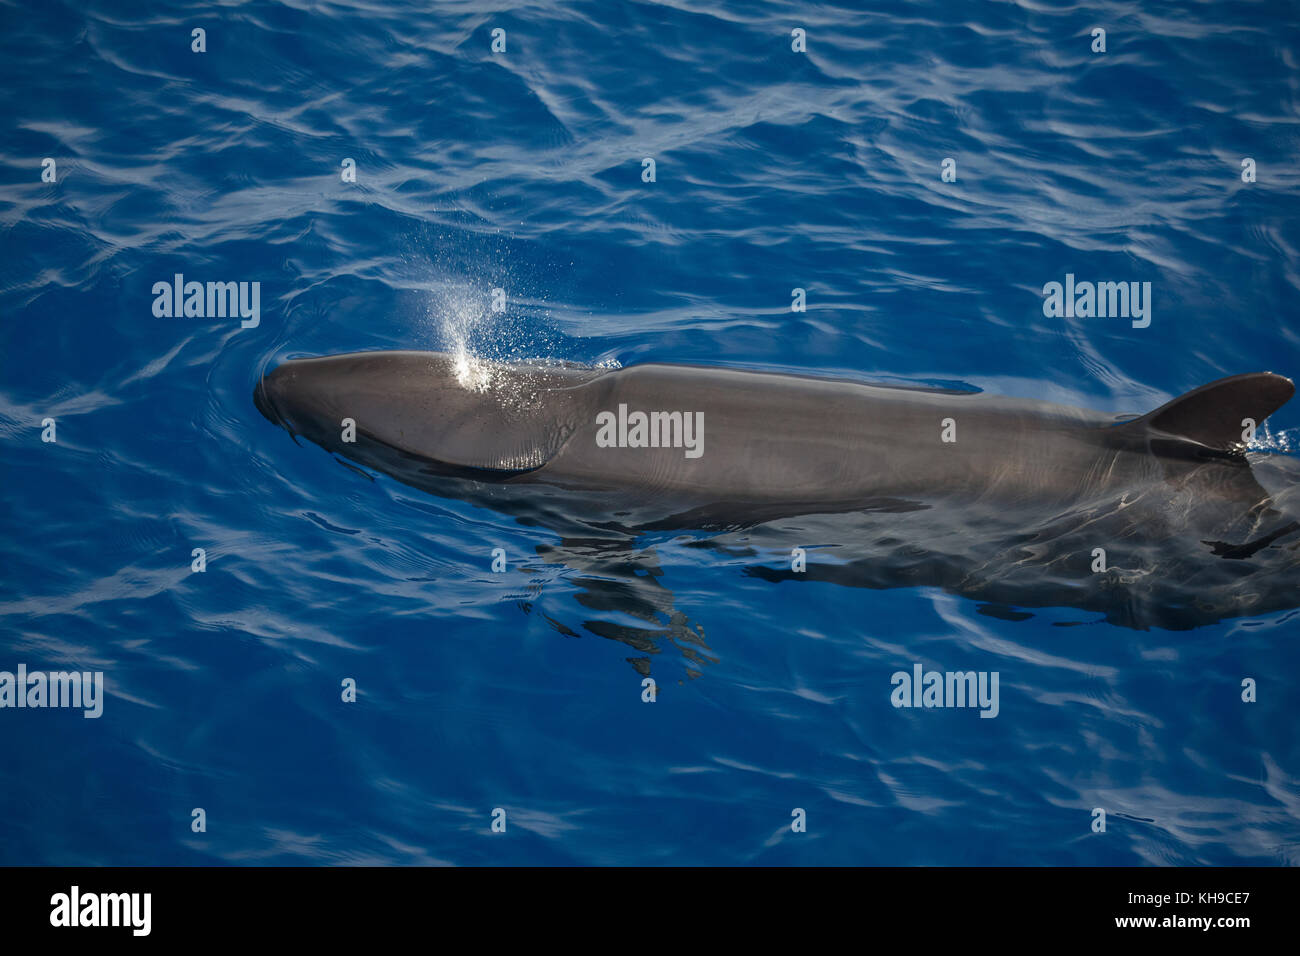 A pod of false killer whales feed on Mahi Mahi in the Atlantic Ocean near Madeira Stock Photo